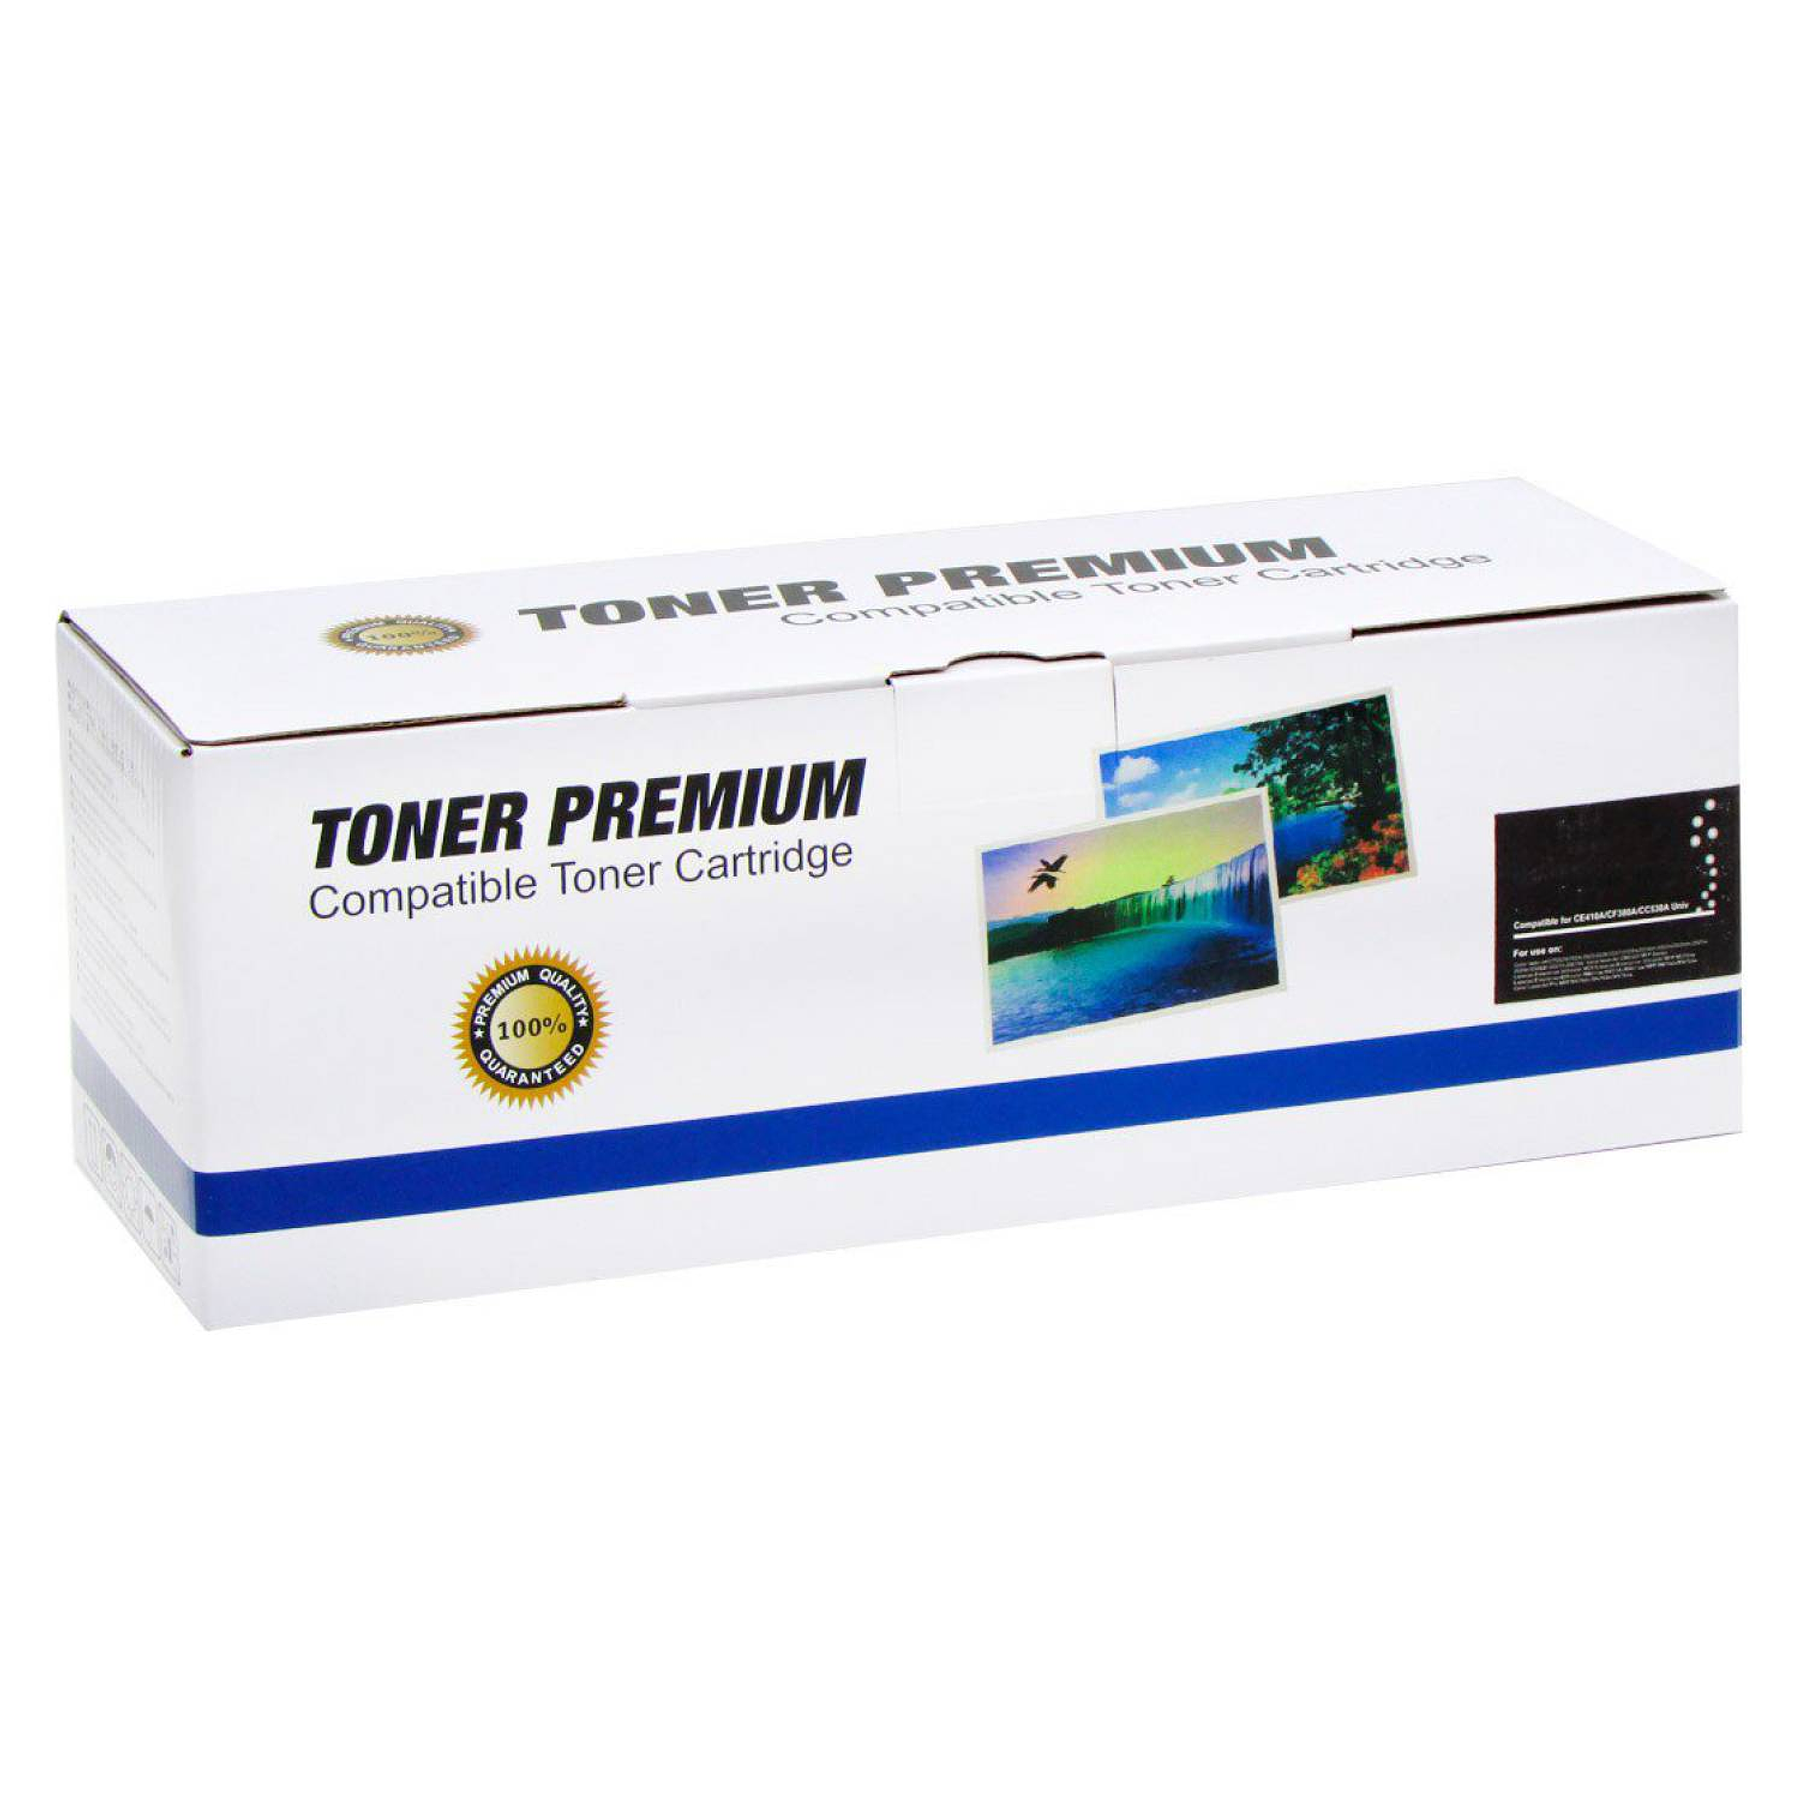 Toner Tn-1060 Compatible con Brother Hl1202 1112 1512 1602